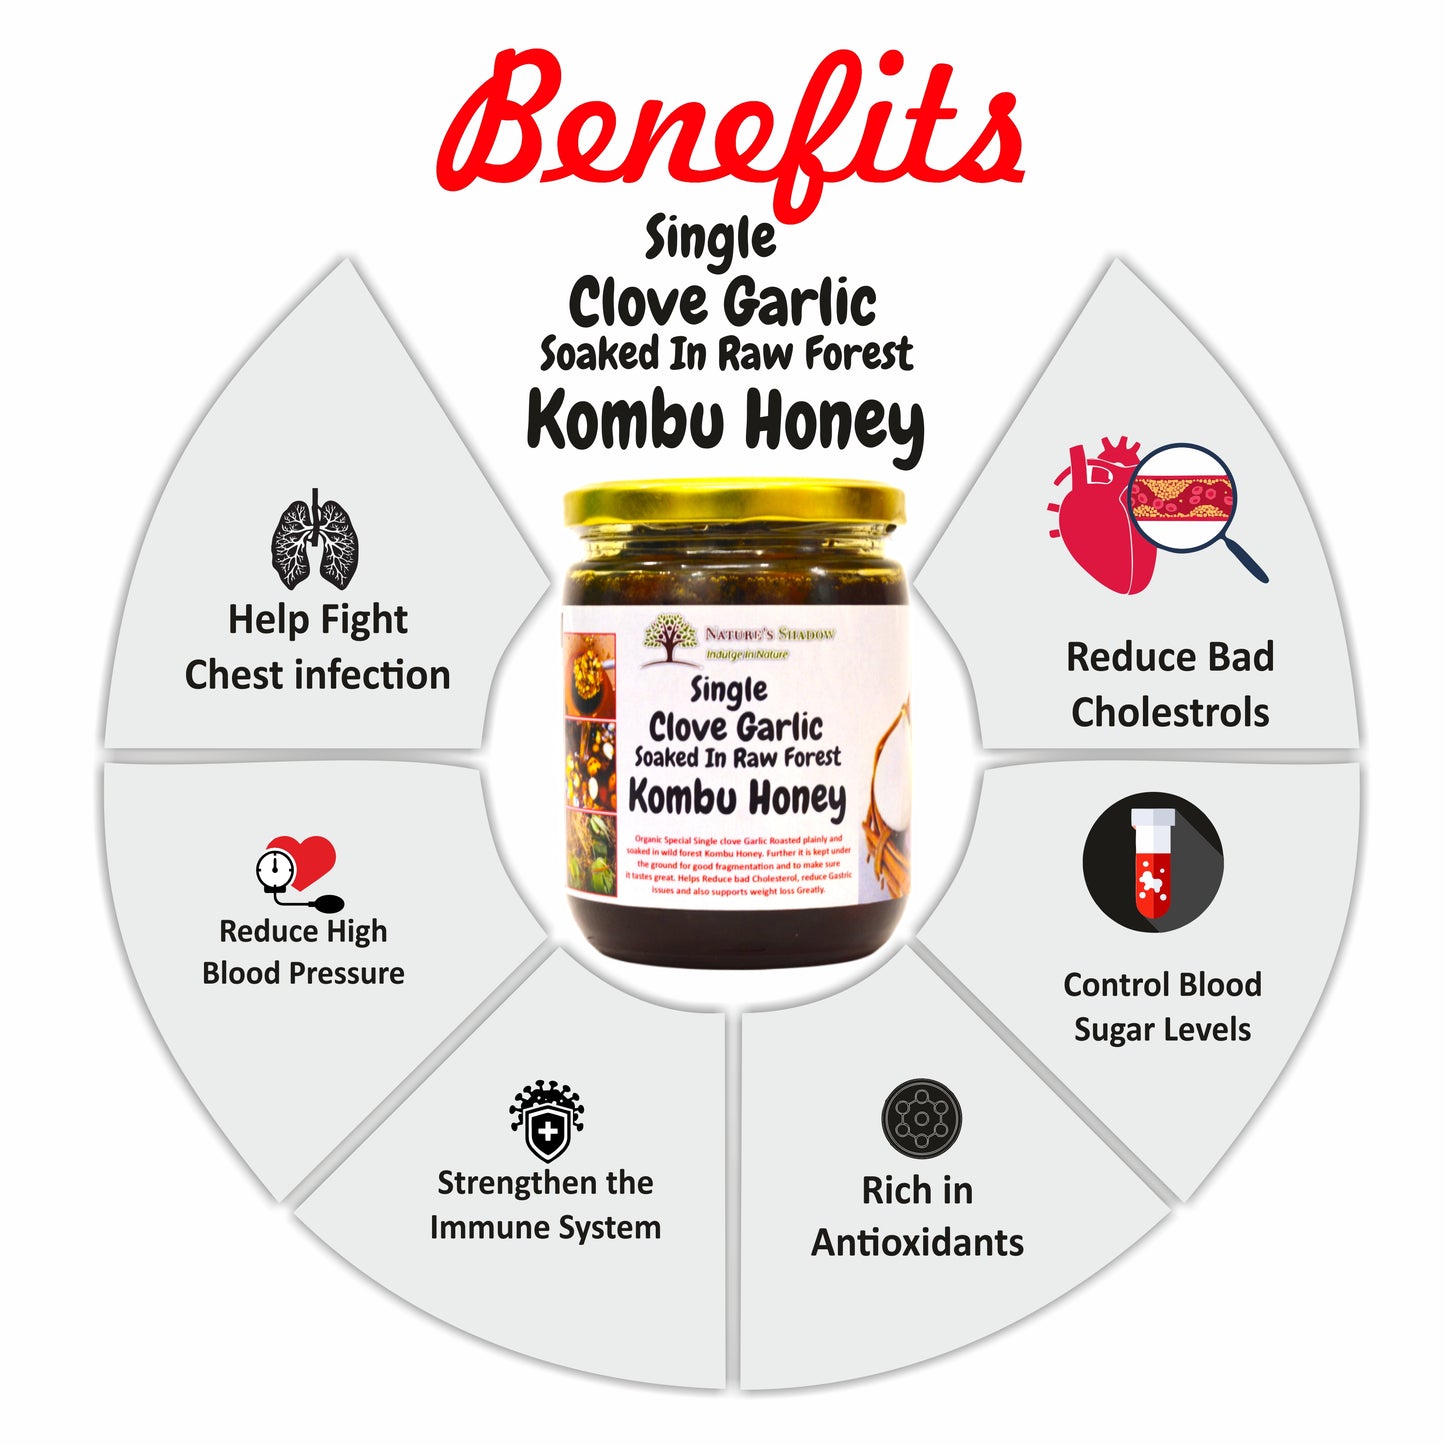 Single Clove Garlic Soaked In Kombu Honey